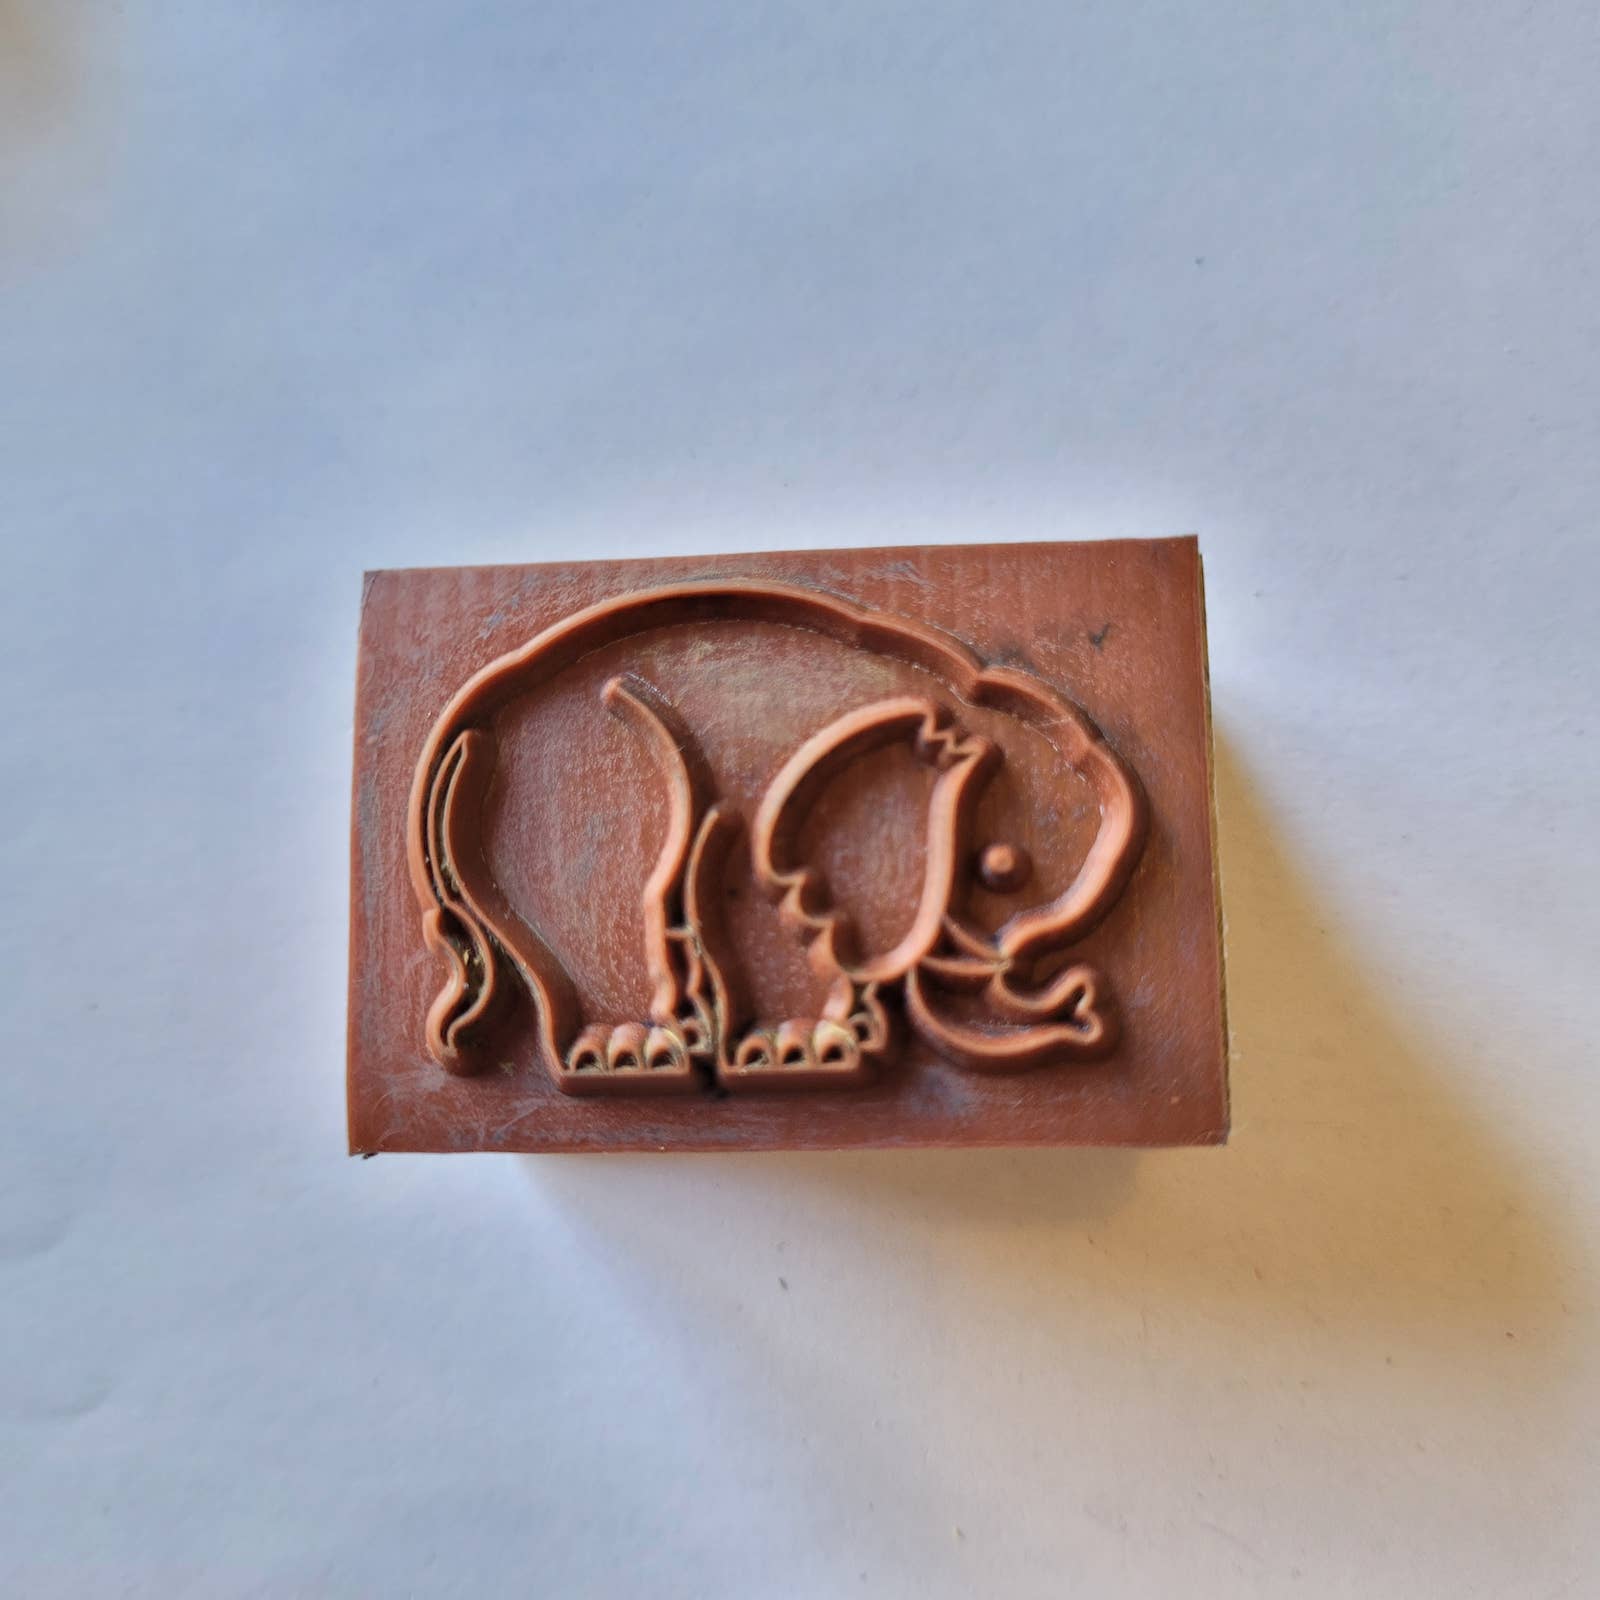 Vintage Rubber Stamp - ElephantMarkita's ClosetUnbranded